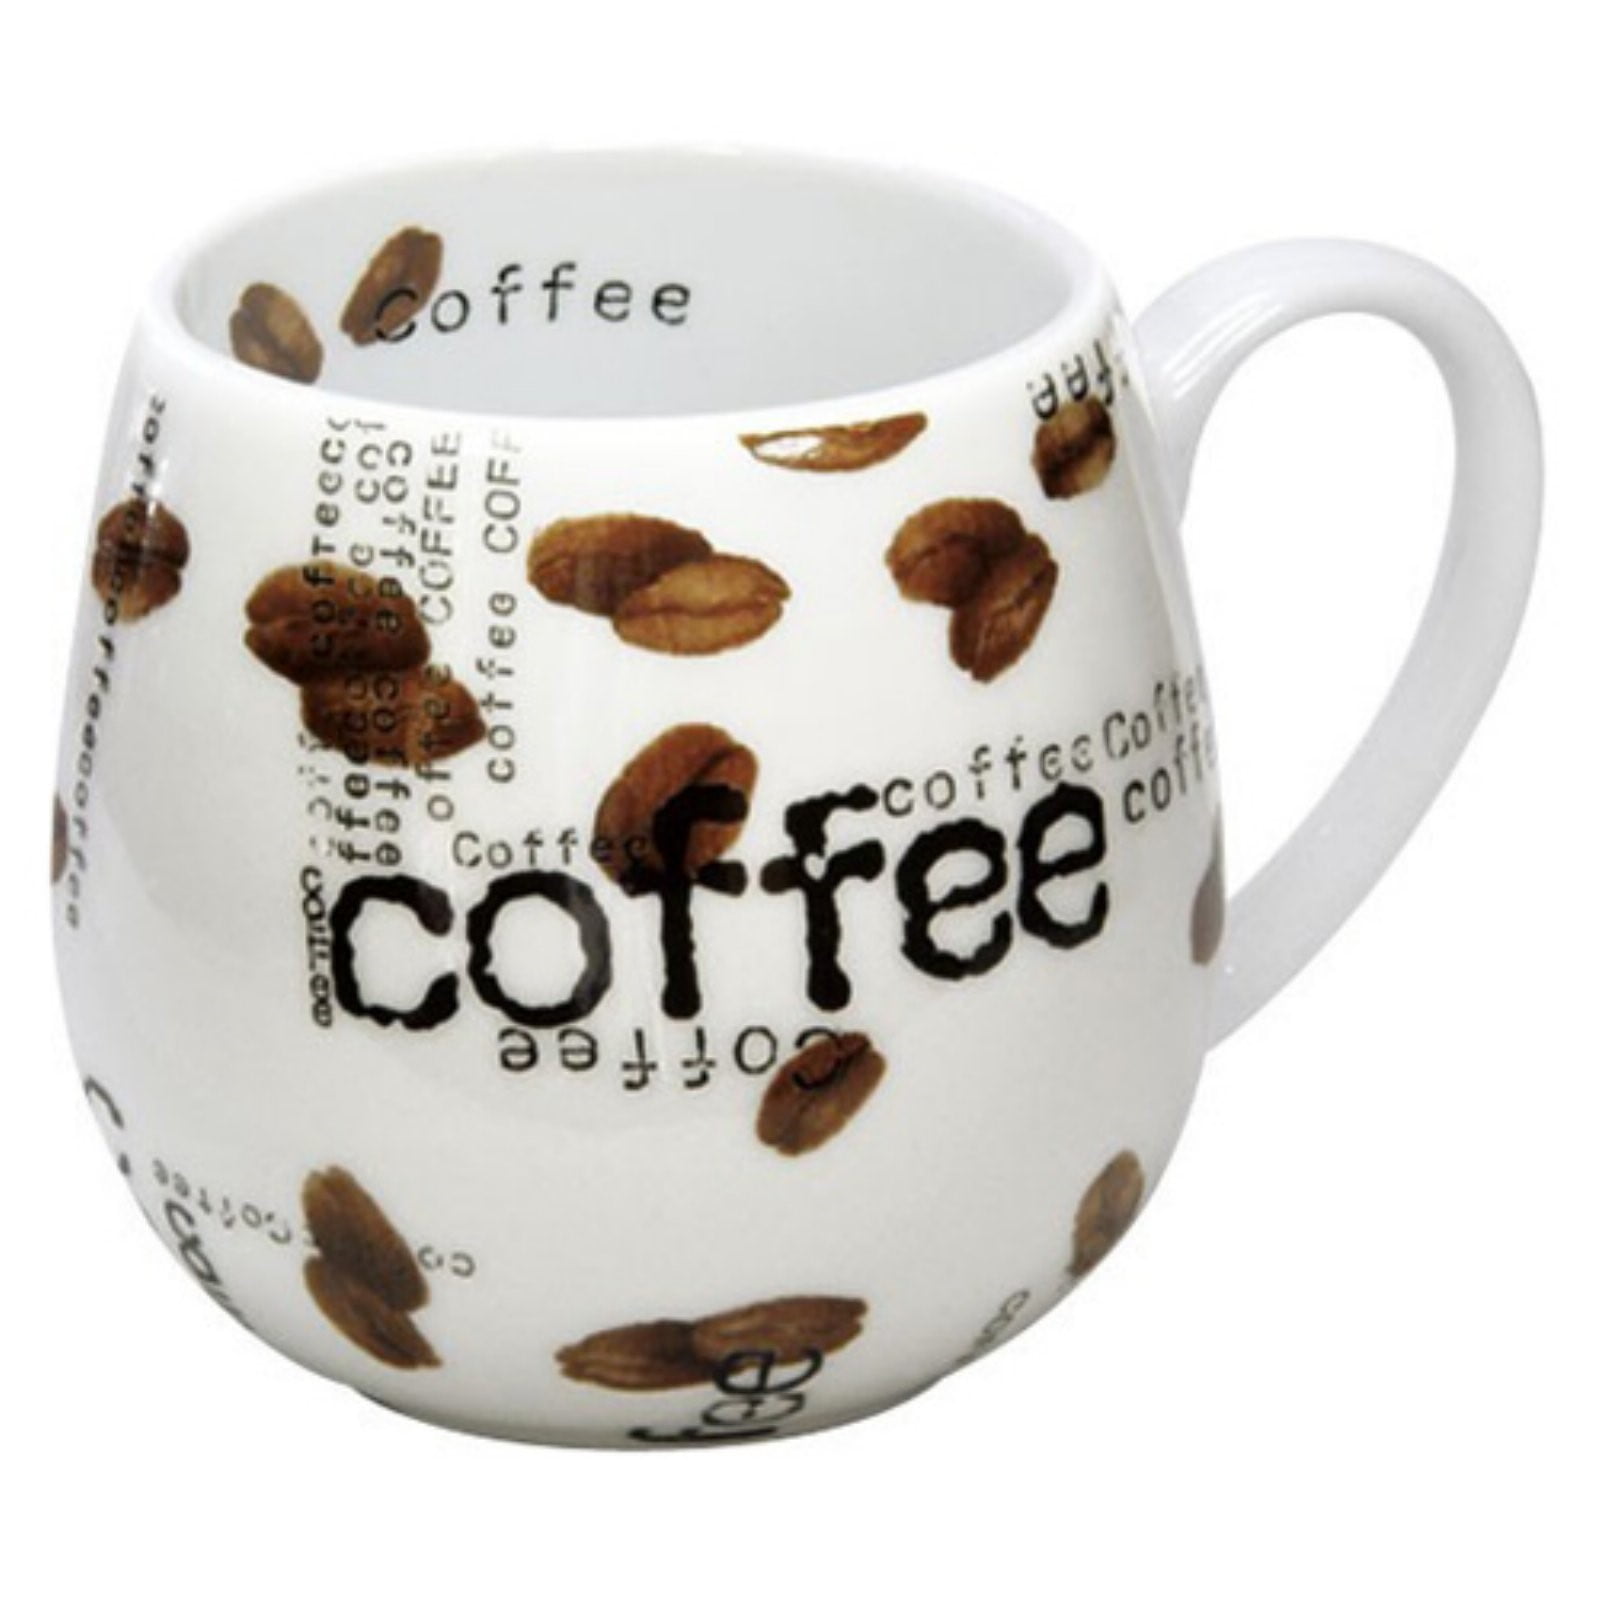 Create 13oz Photo Collage Travel Coffee Mug with Handle